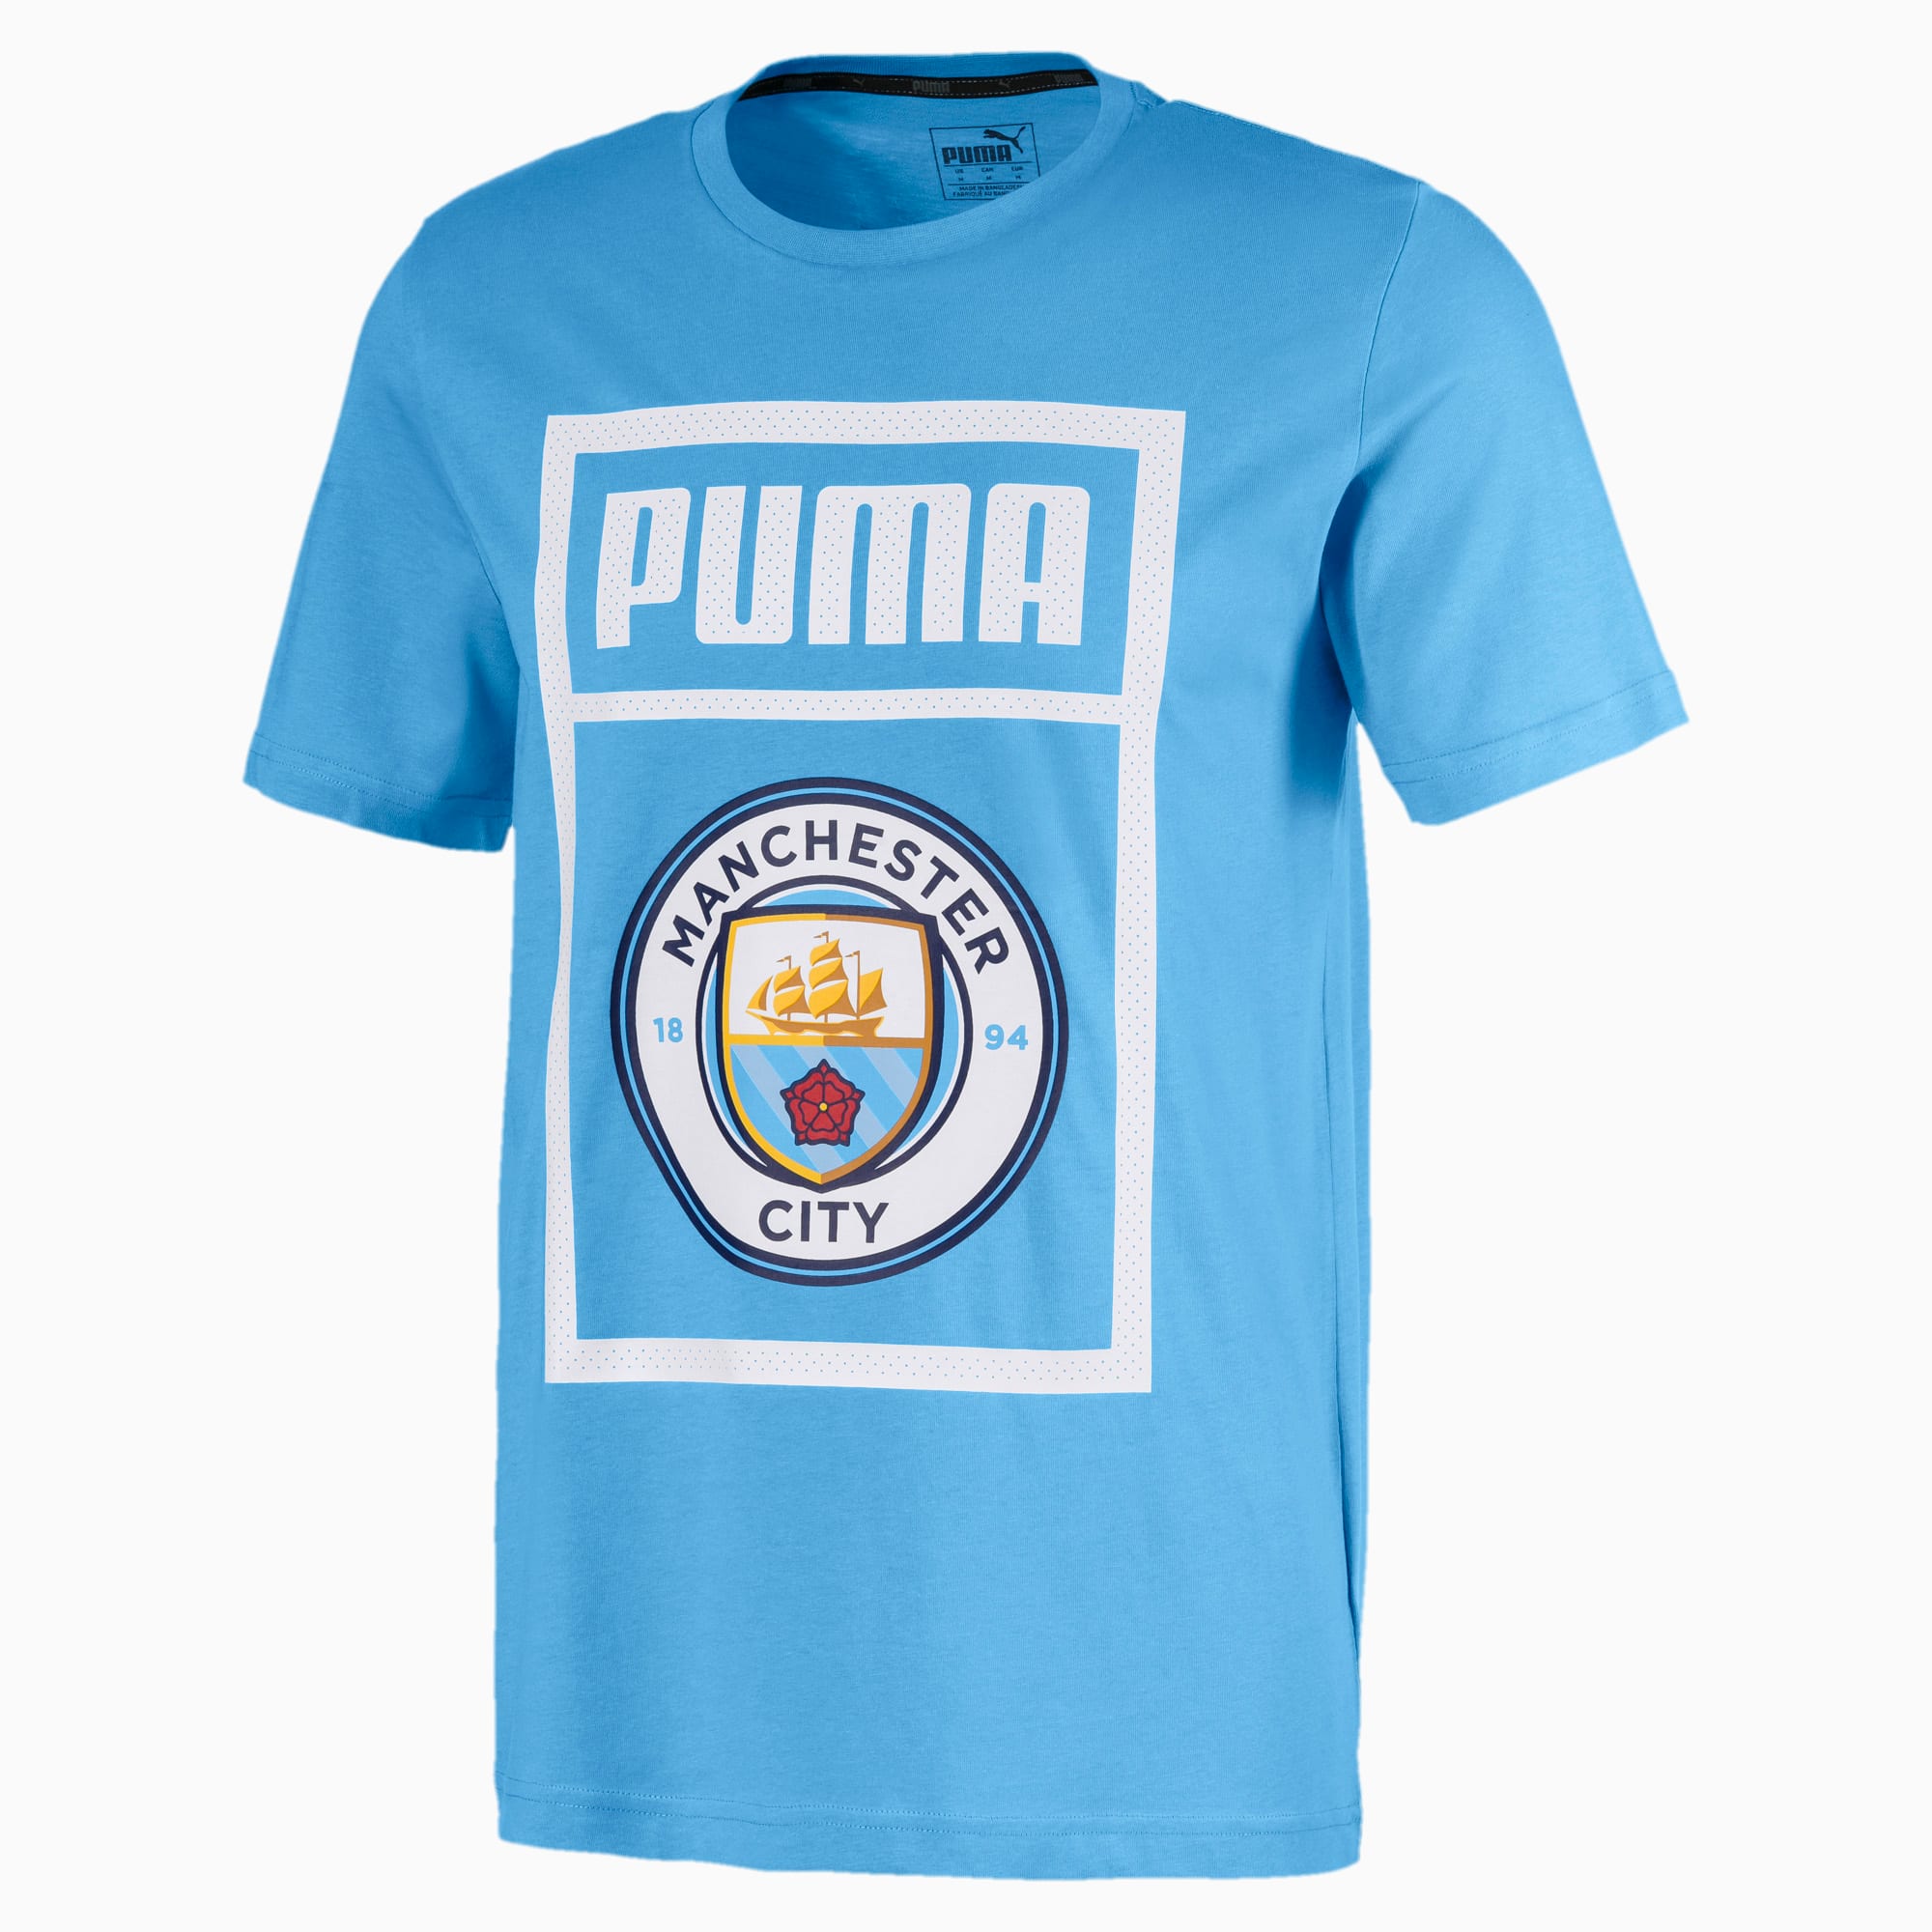 Футболка манчестер сити. Футболка Puma Manchester City. Puma футболка Манчестер Сити. Puma Forever better Manchester City футболка. Манчестер футболка голубая.